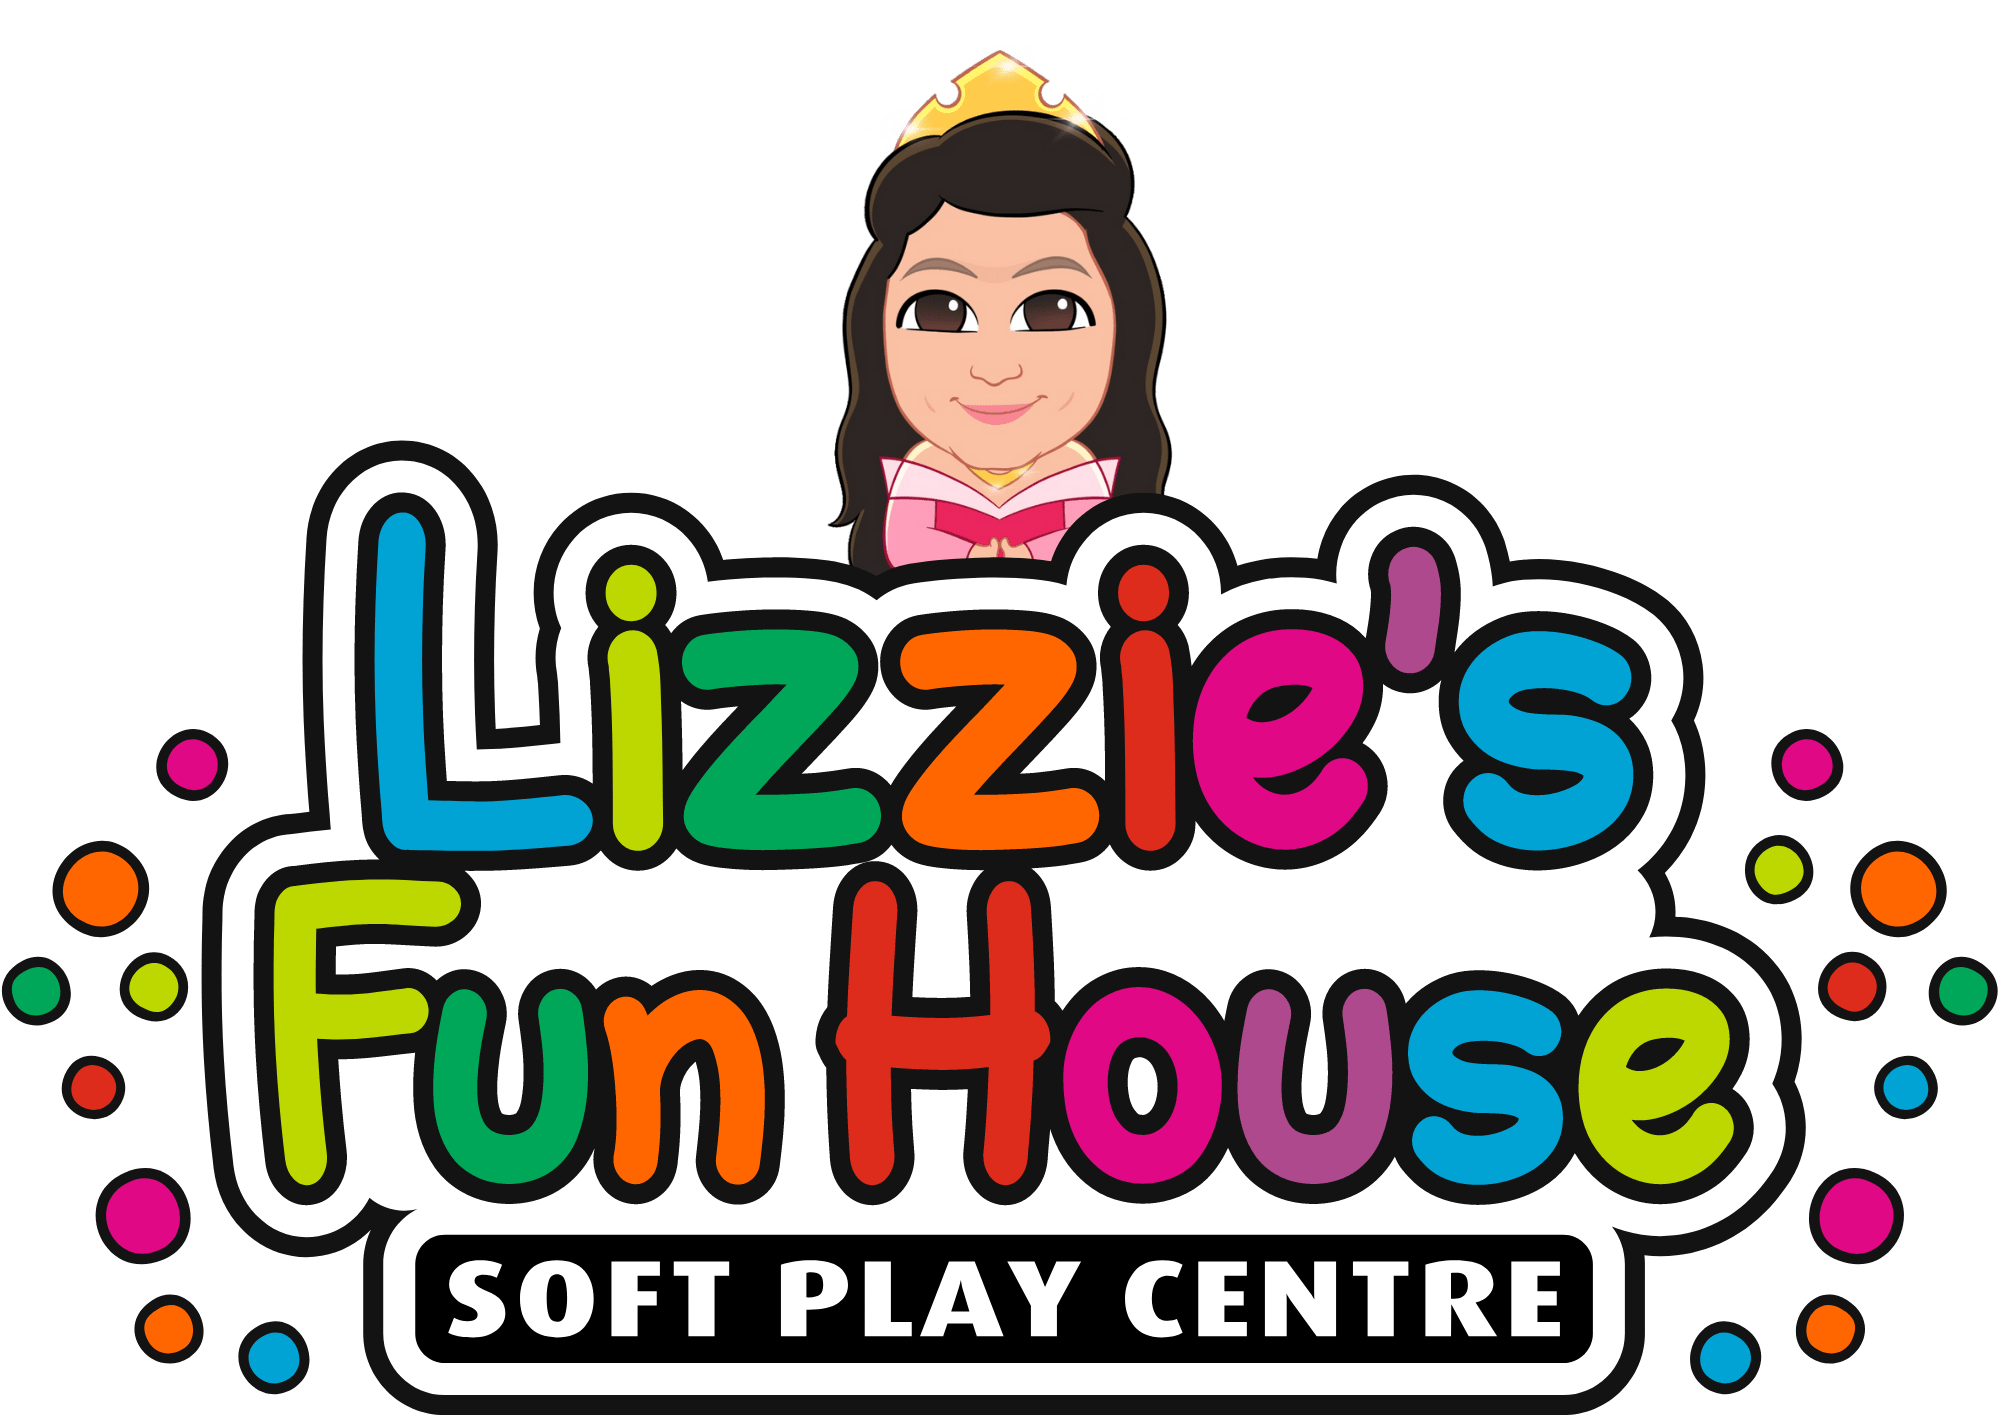 Lizzie’s Fun House